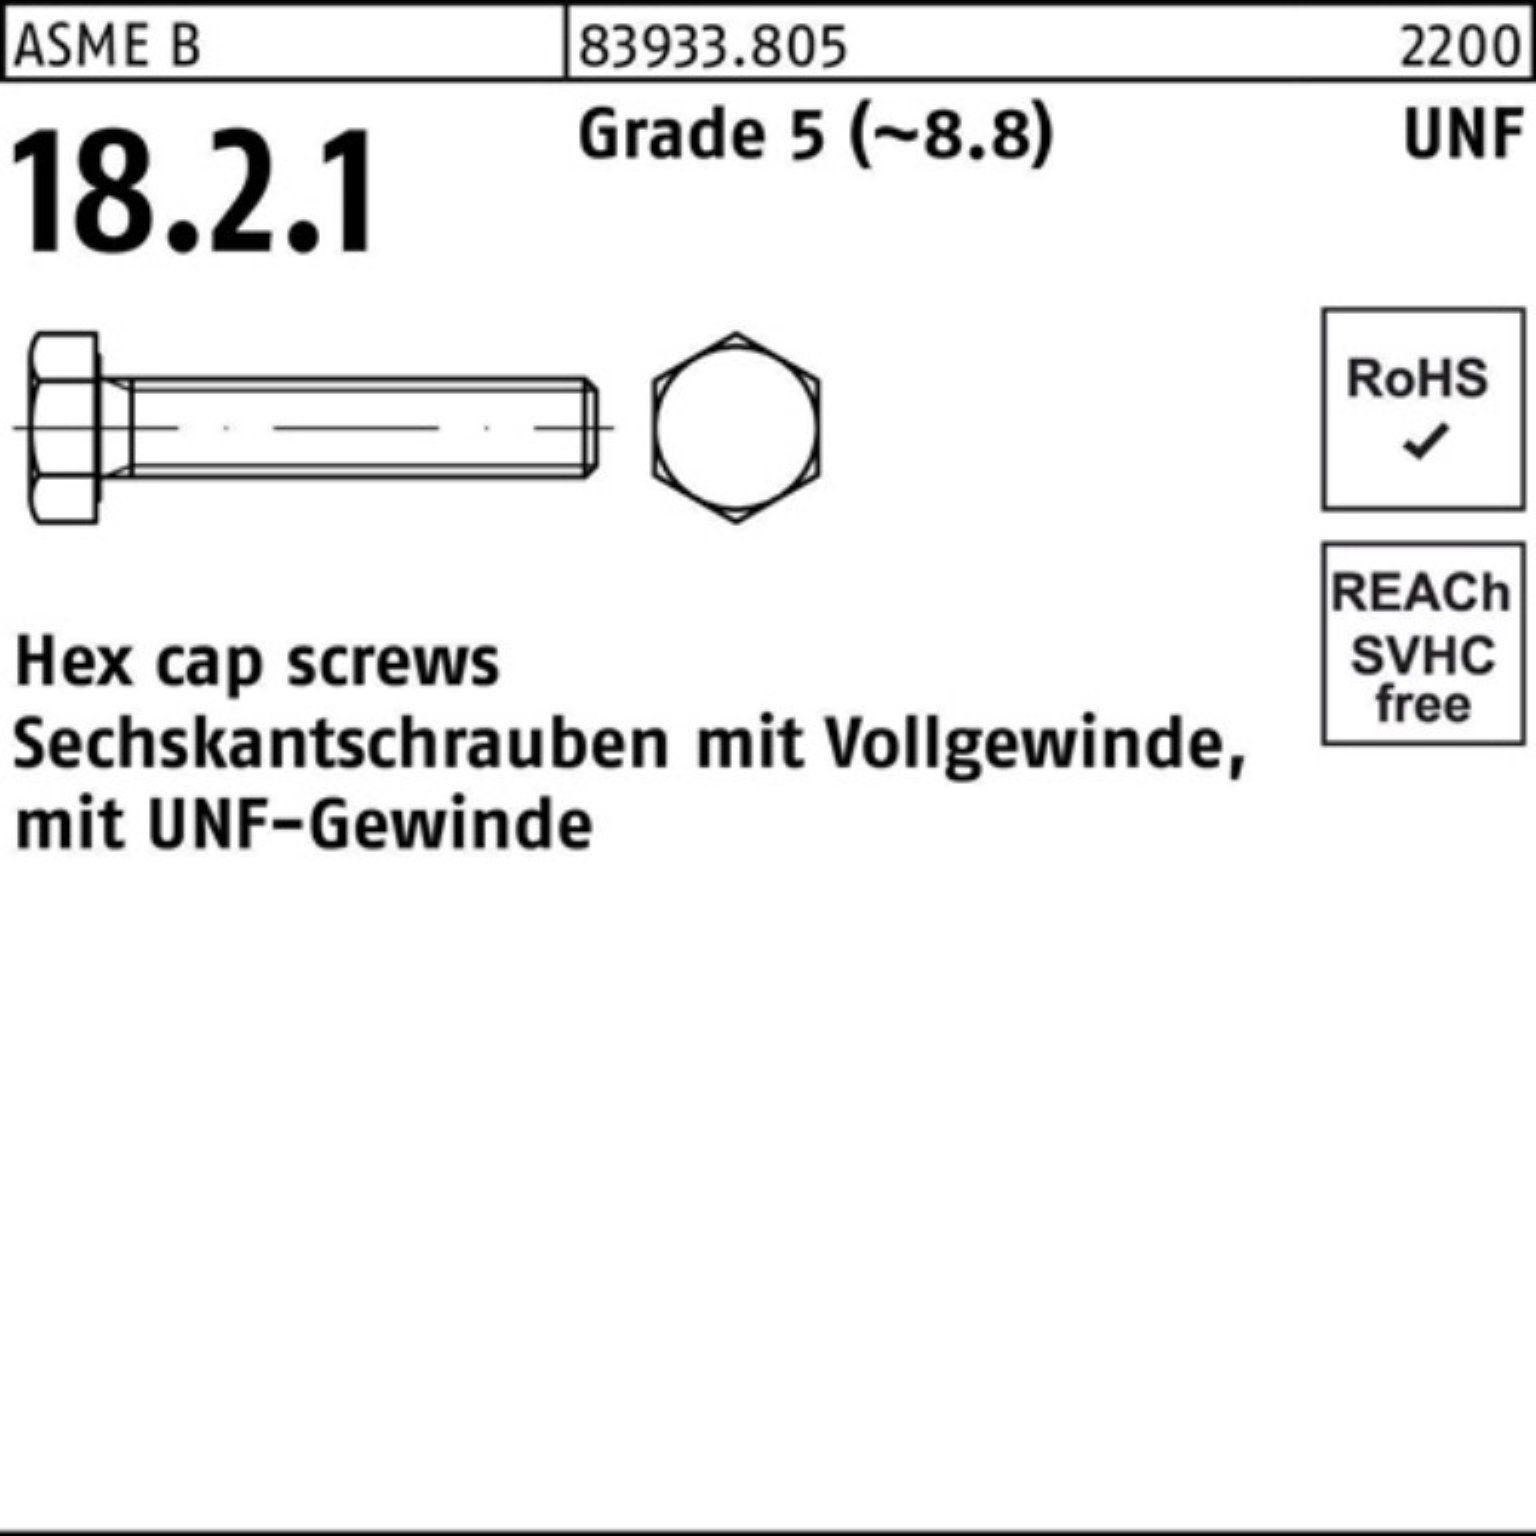 Reyher Sechskantschraube 100er Pack Sechskantschraube R 83933 UNF-Gewinde VG 1/4x 5/8 Grade 5